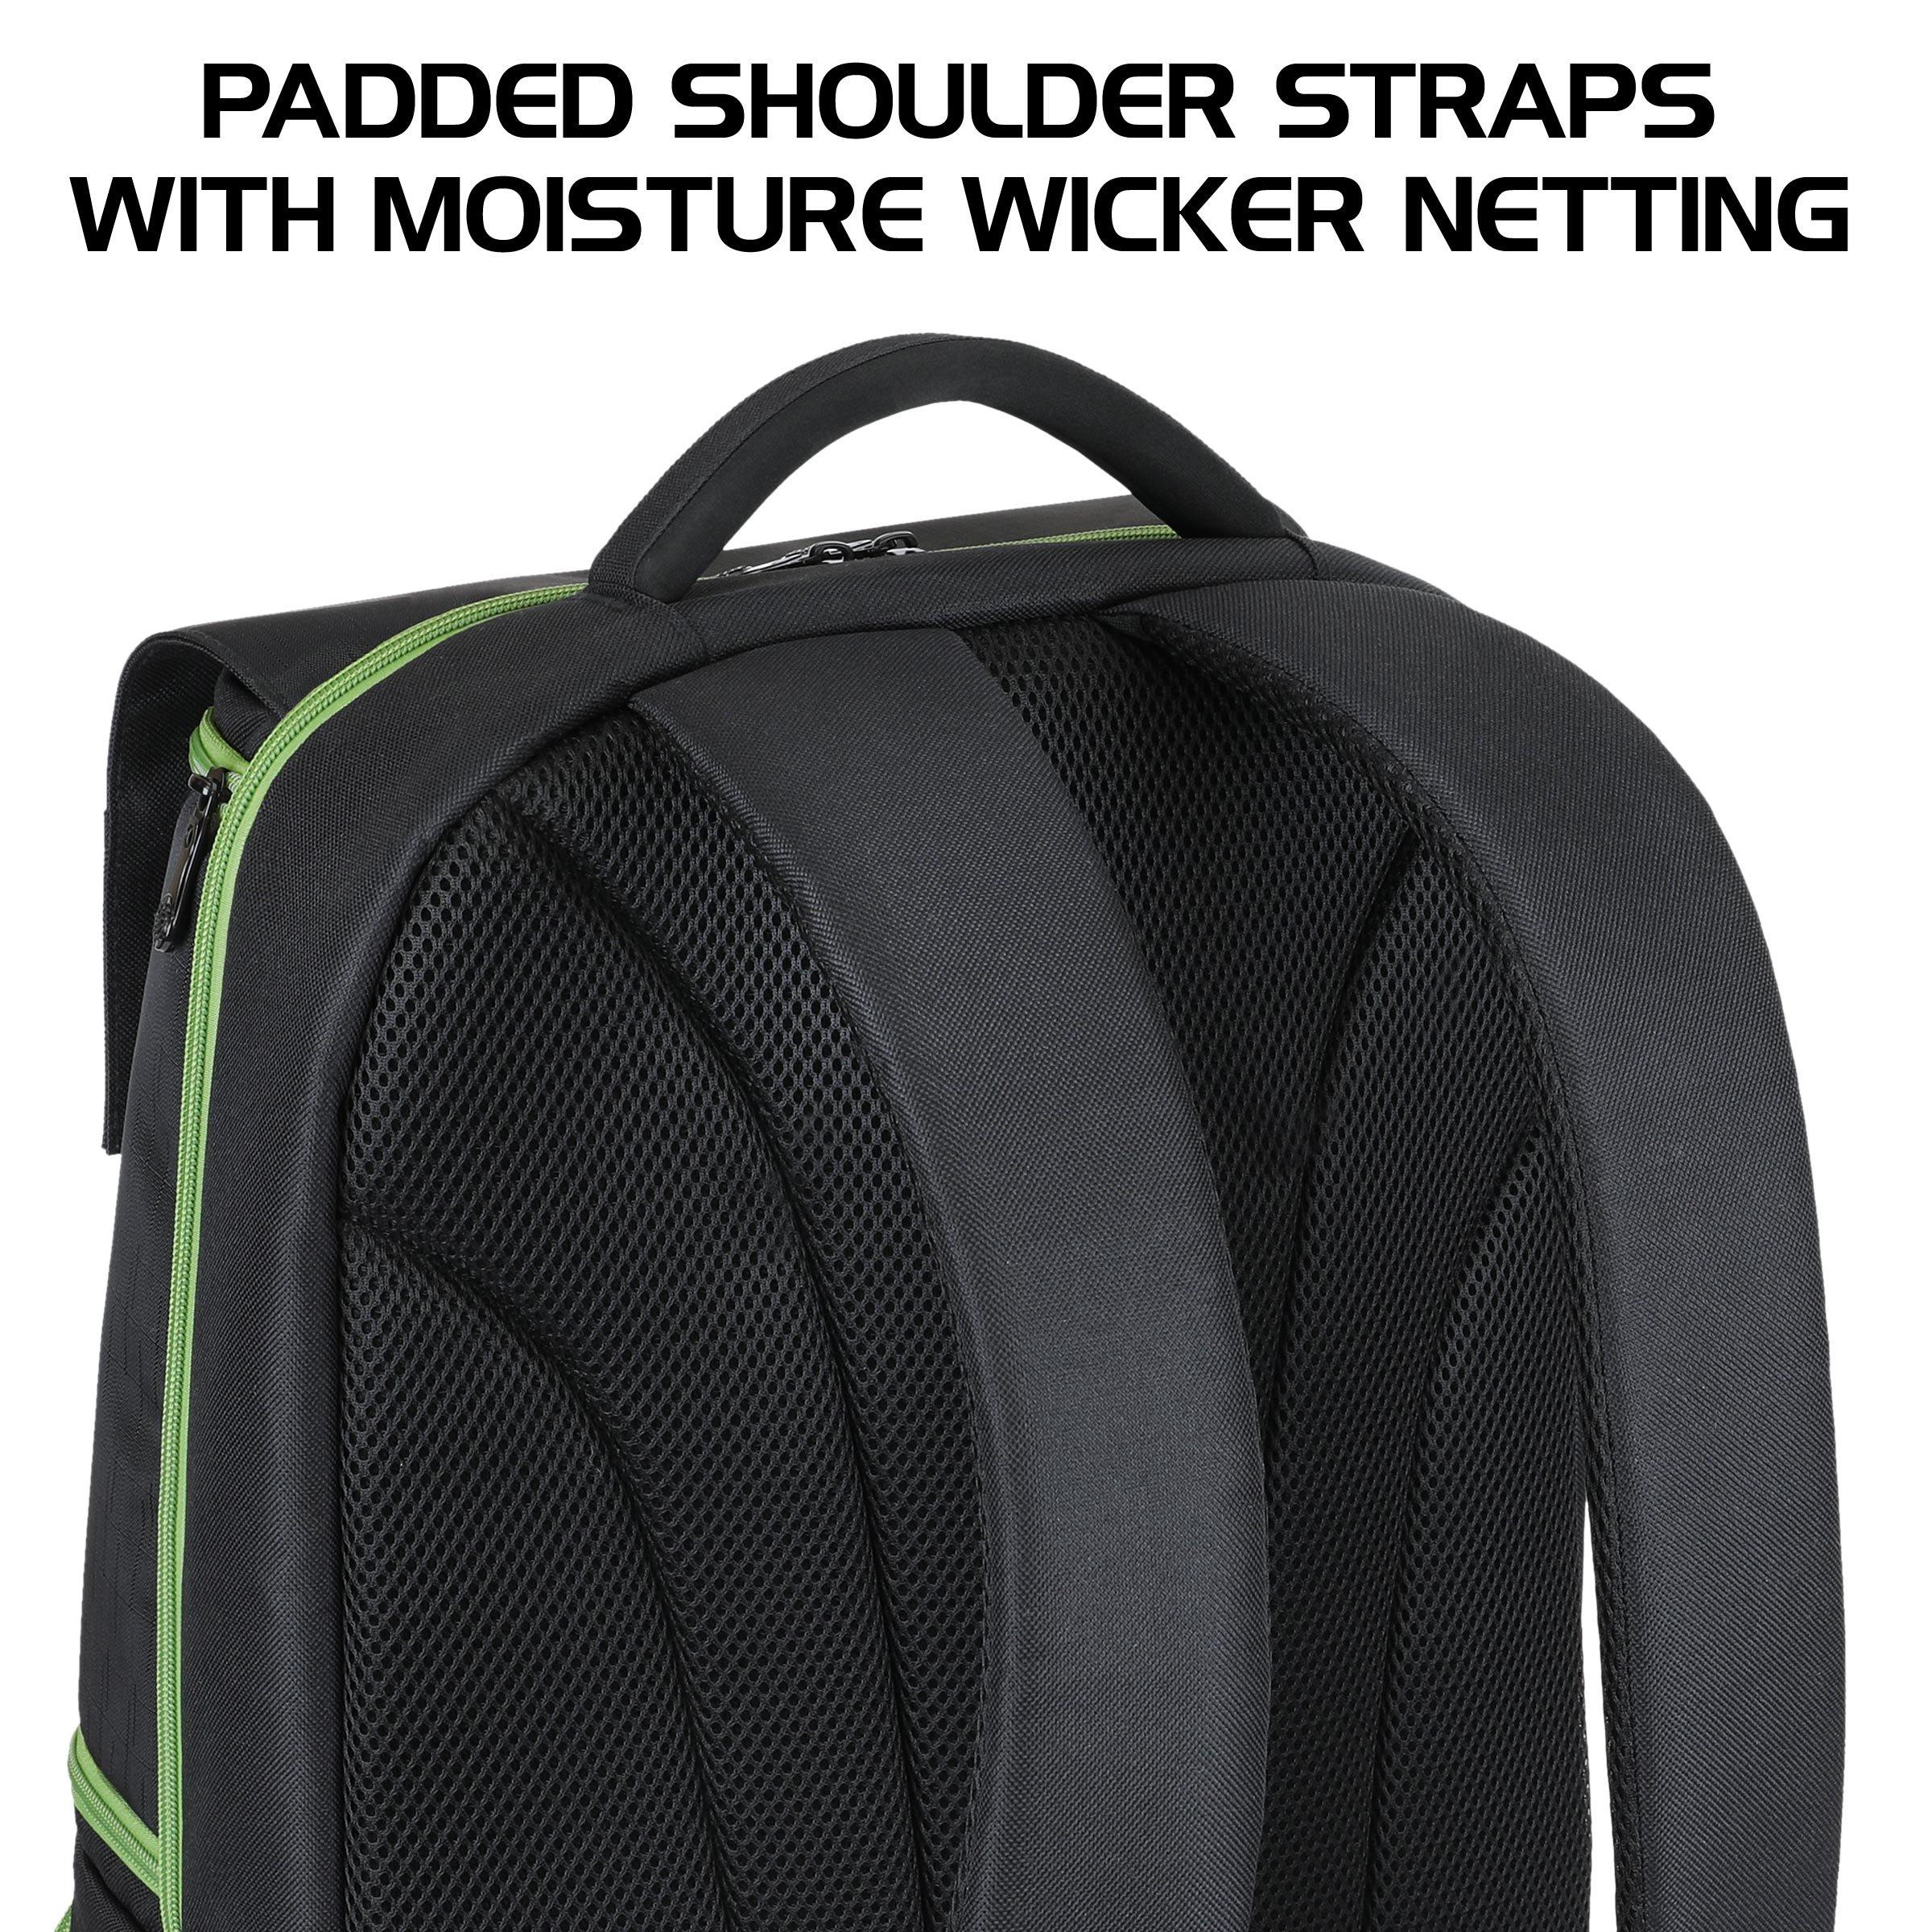 Xbox Laptop Backpack - Xbox Series X Geometric Pattern – Xbox Gear